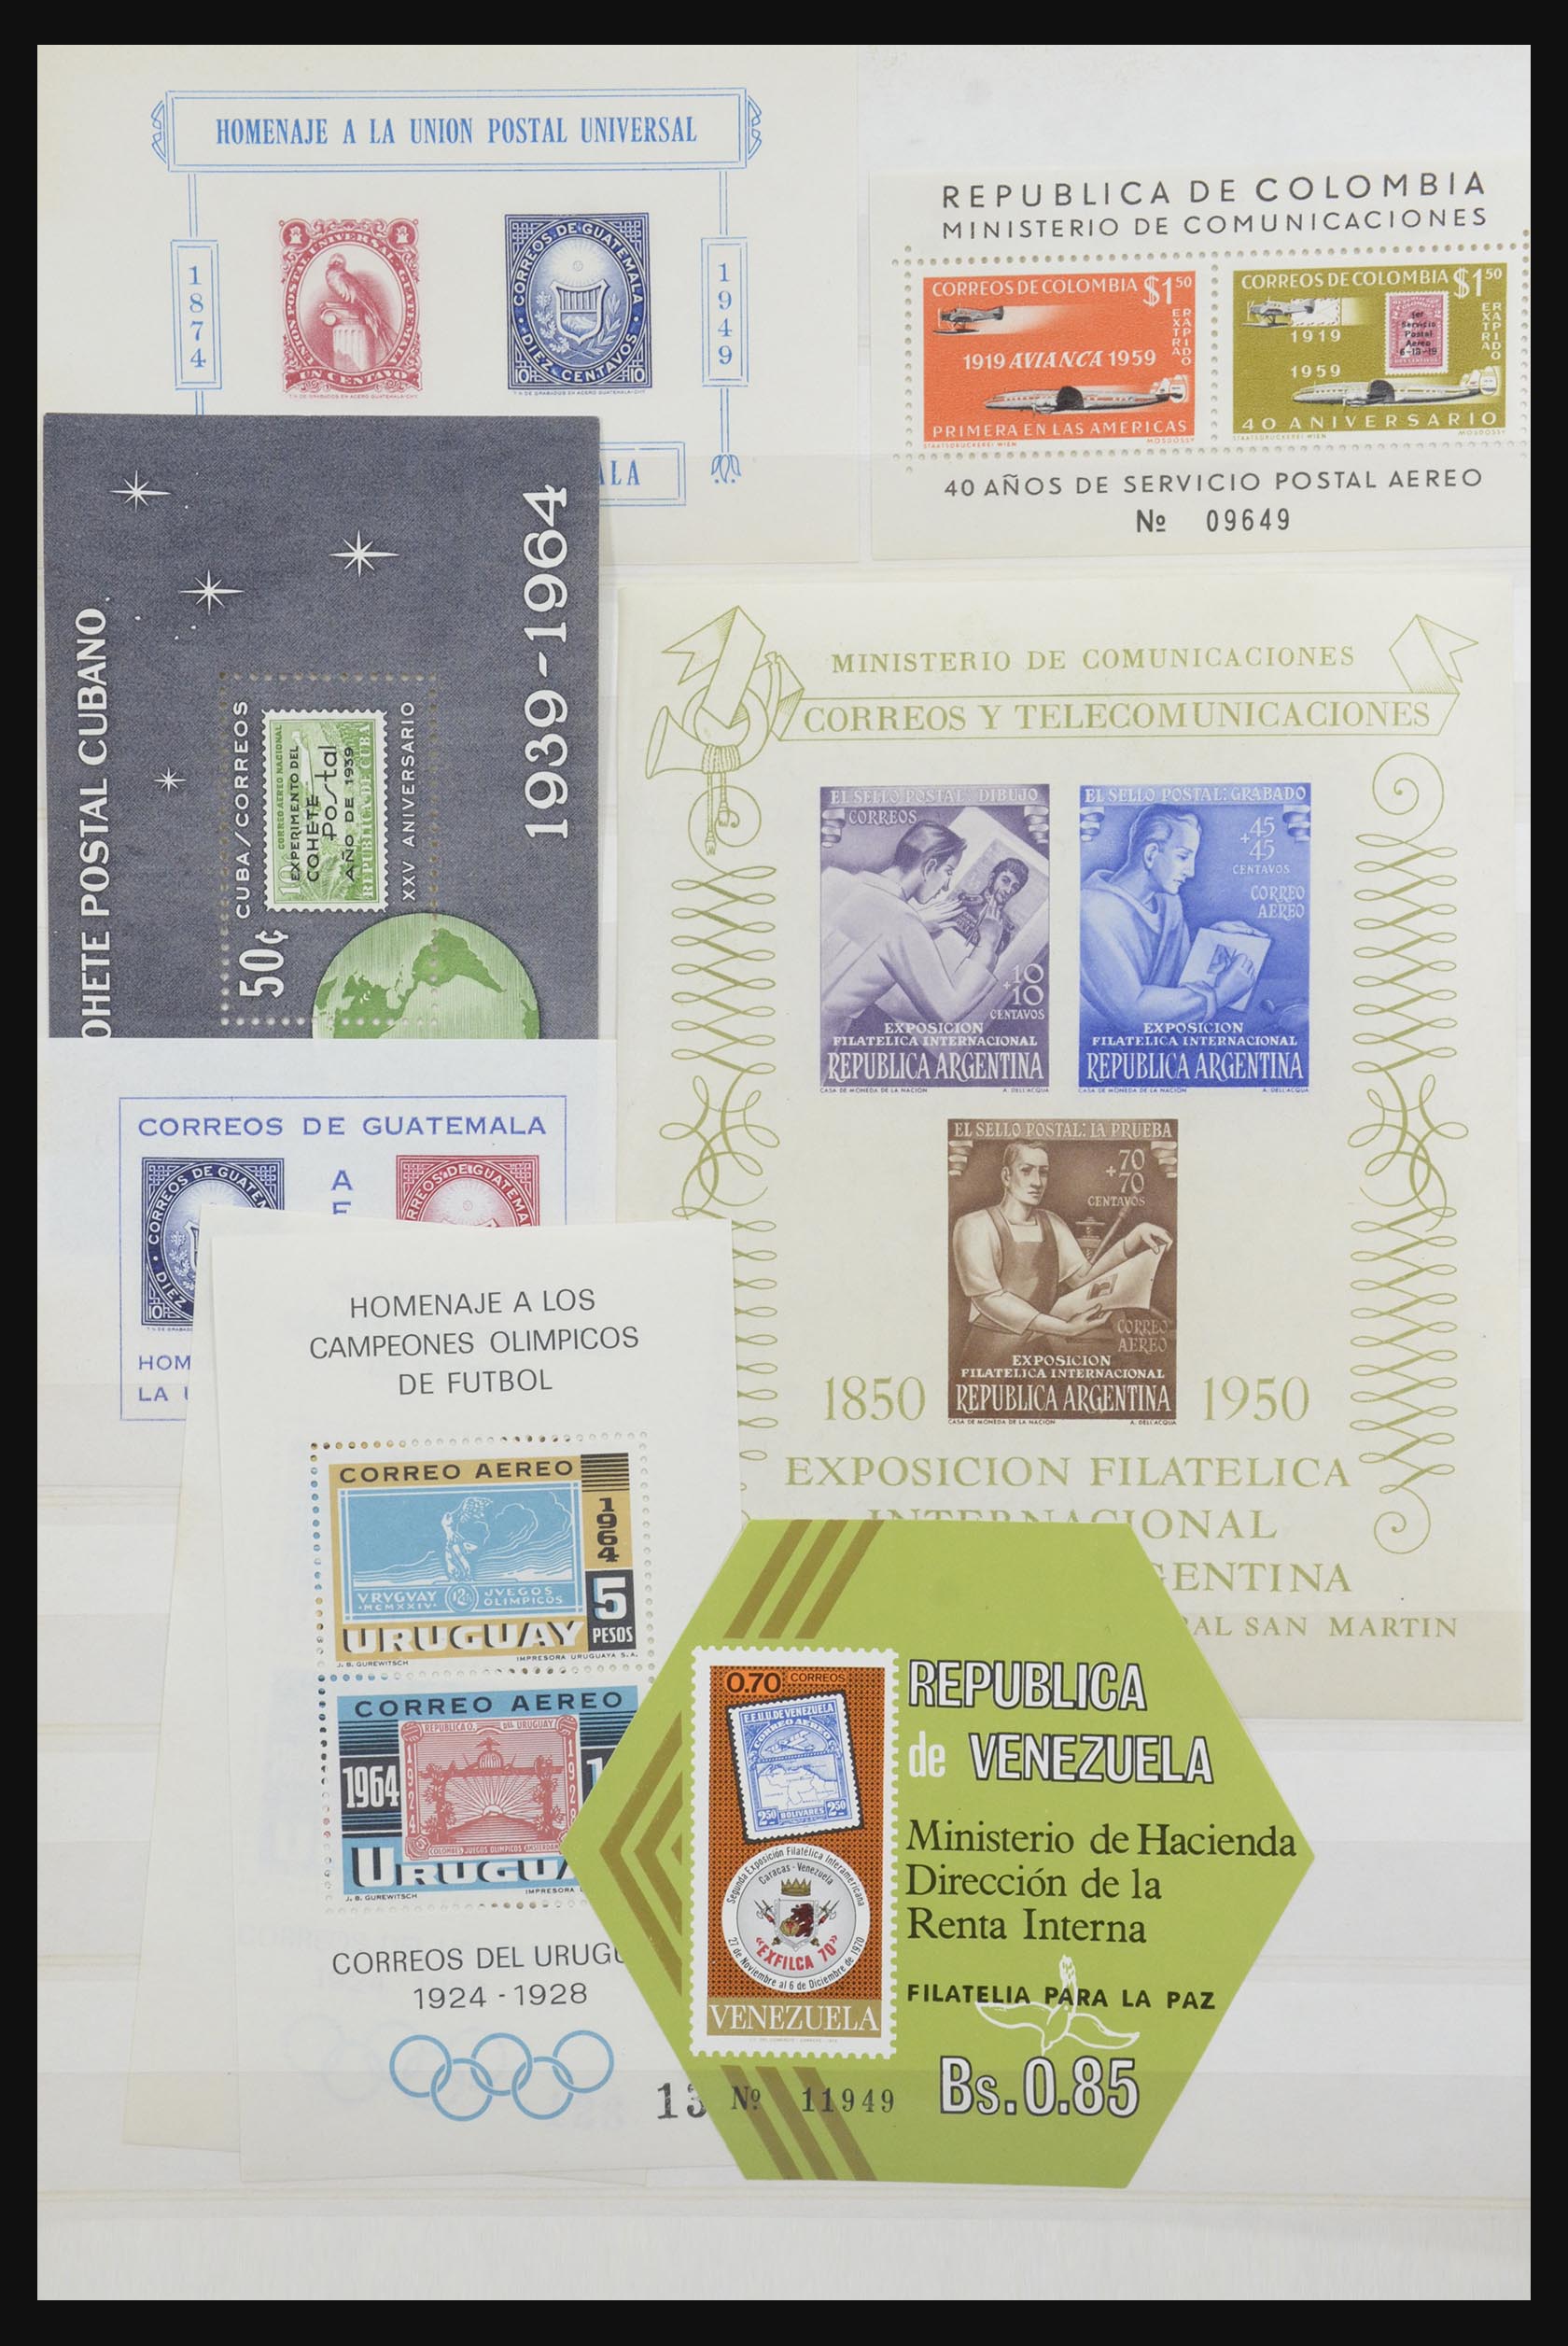 31652 006 - 31652 Motief: postzegel op postzegel 1940-1993.